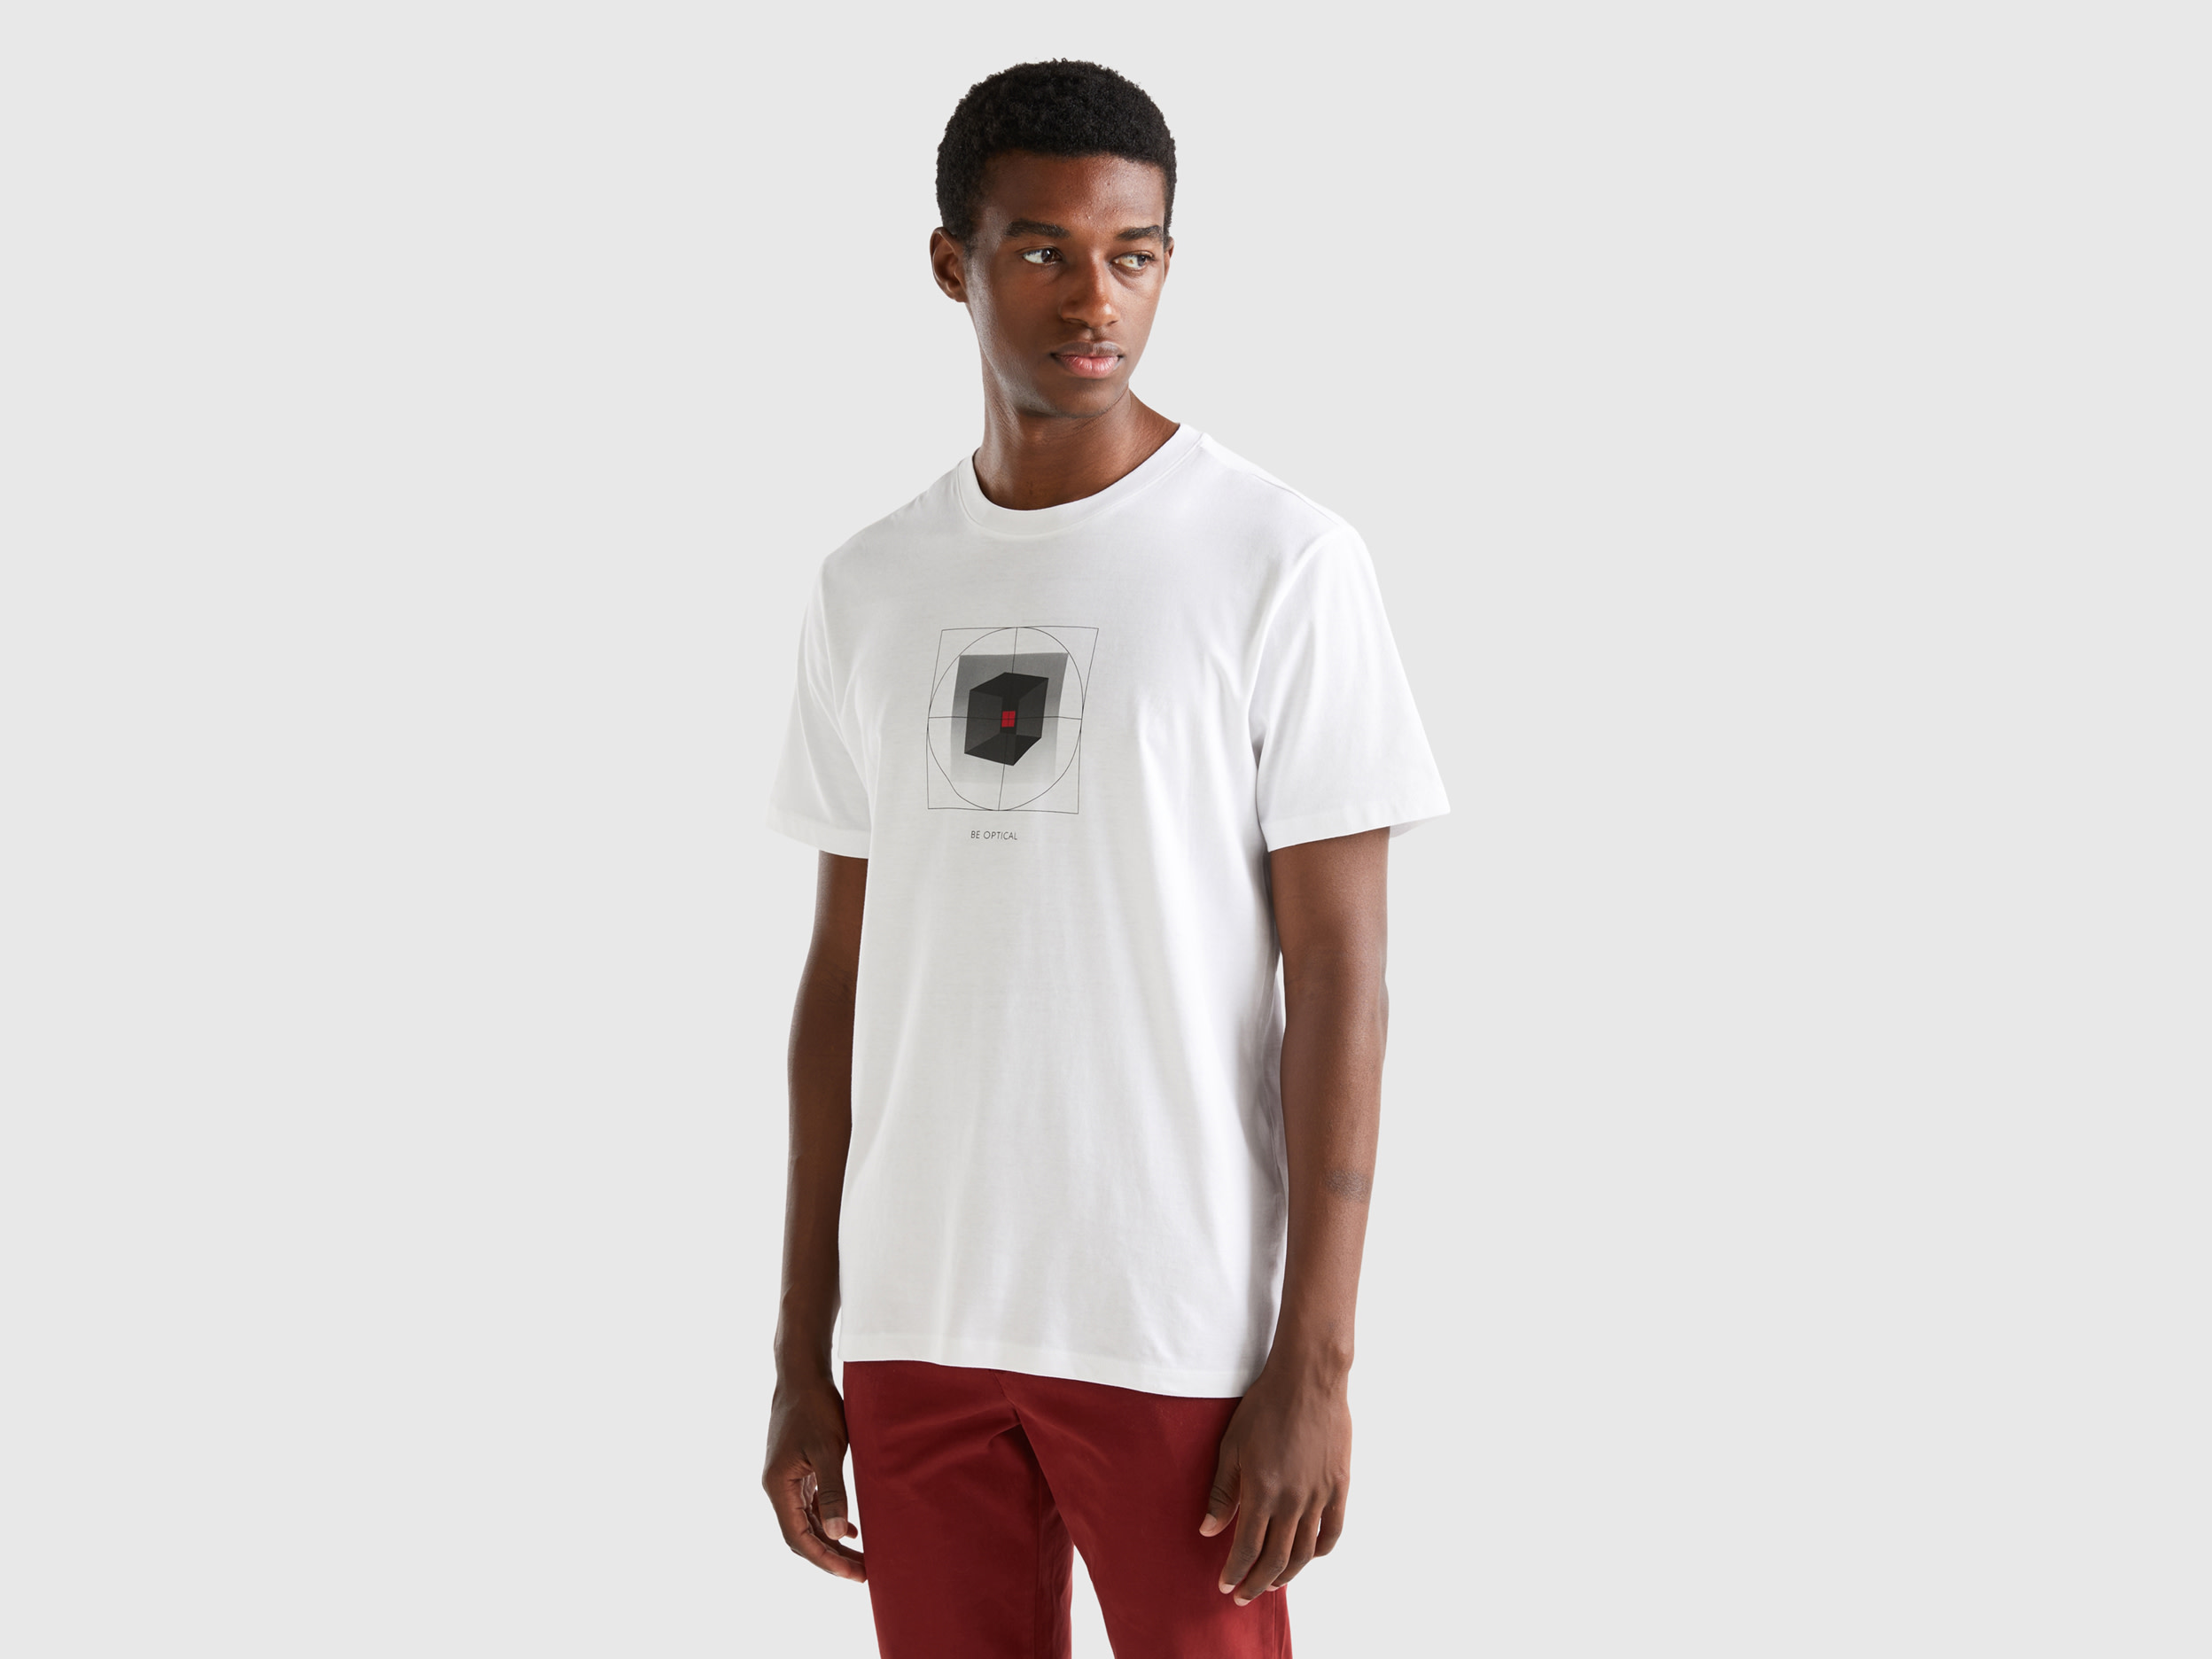 Benetton, 100% Cotton T-shirt With Print, size L, White, Men